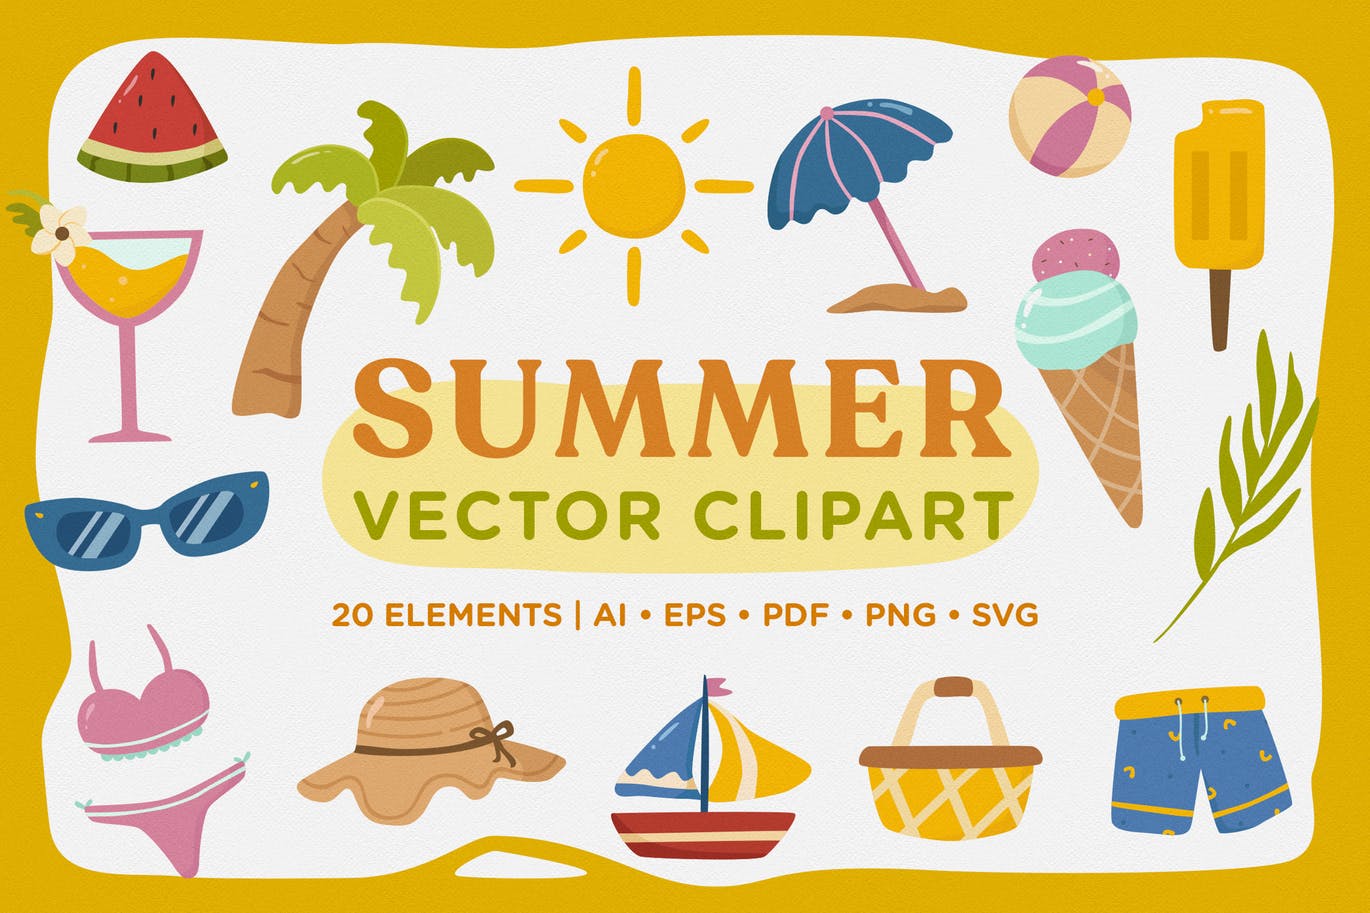 夏日元素矢量剪贴画素材 Summer Vector Clipart Pack插图